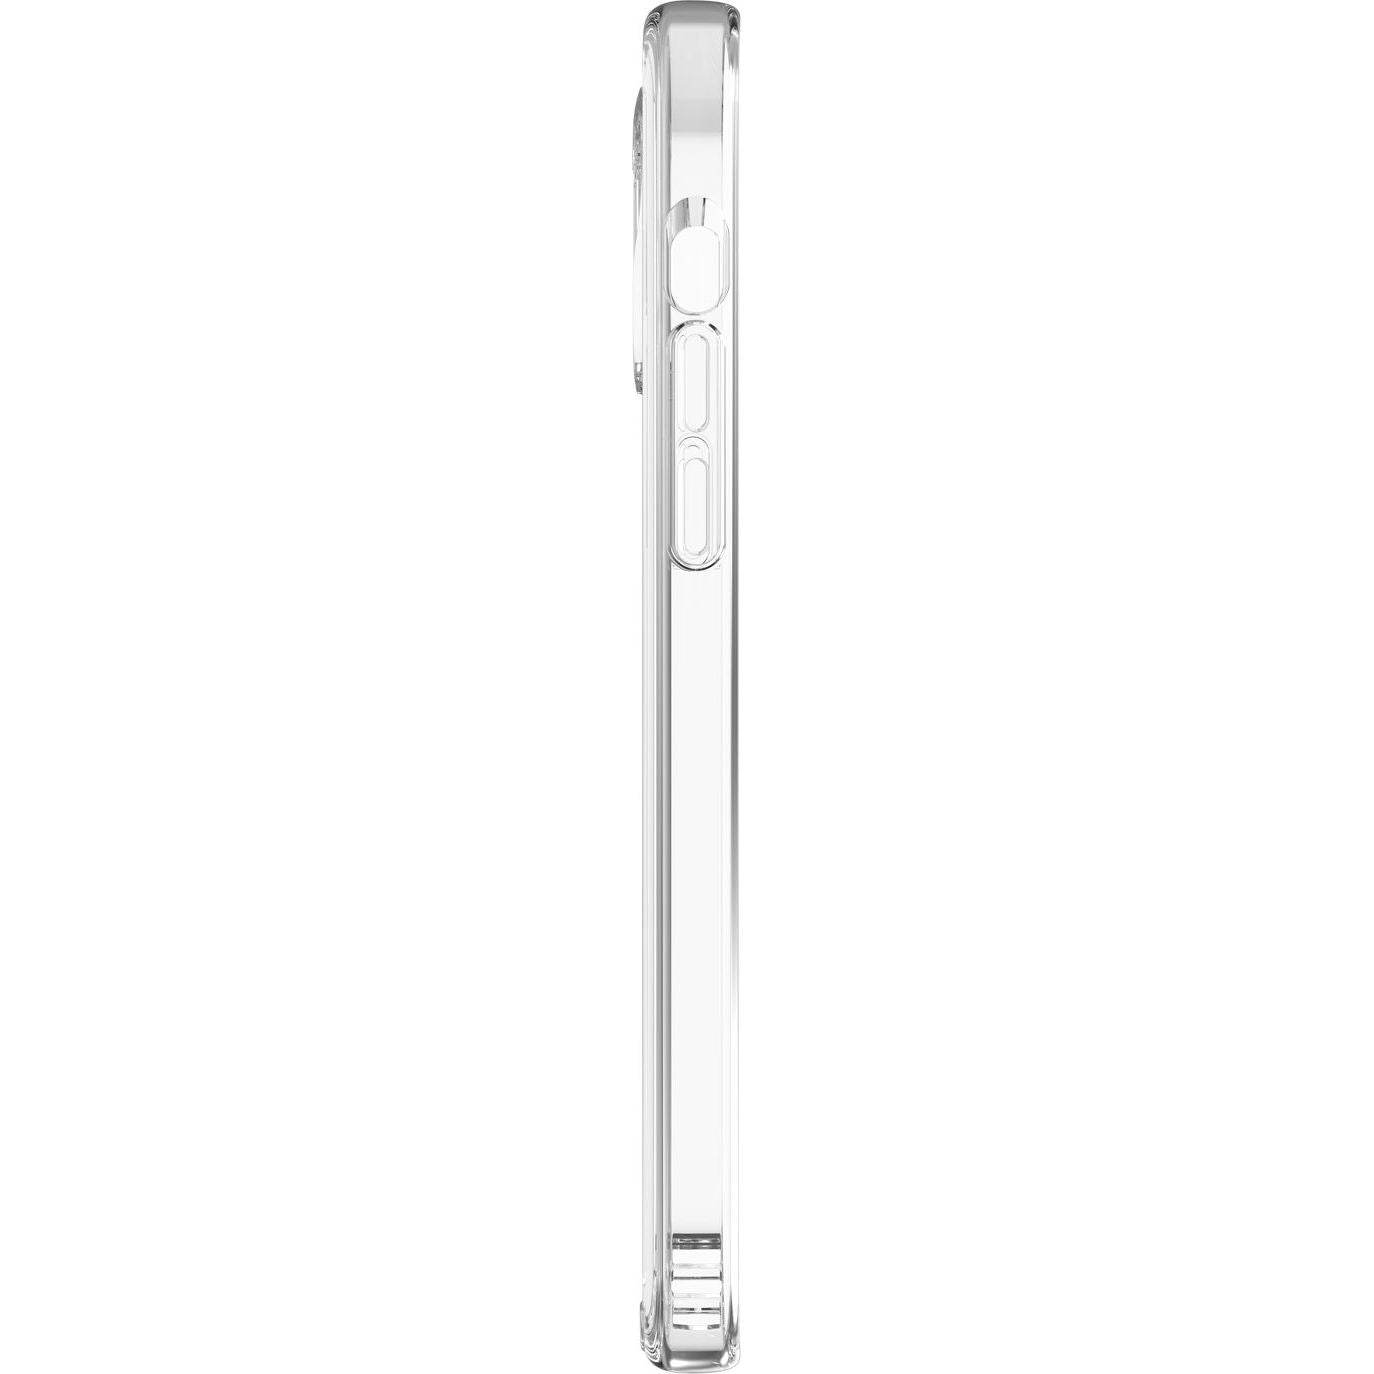 Schutzhülle Zagg Gear4 Crystal Palace für Apple iPhone 15 Plus, Transparent